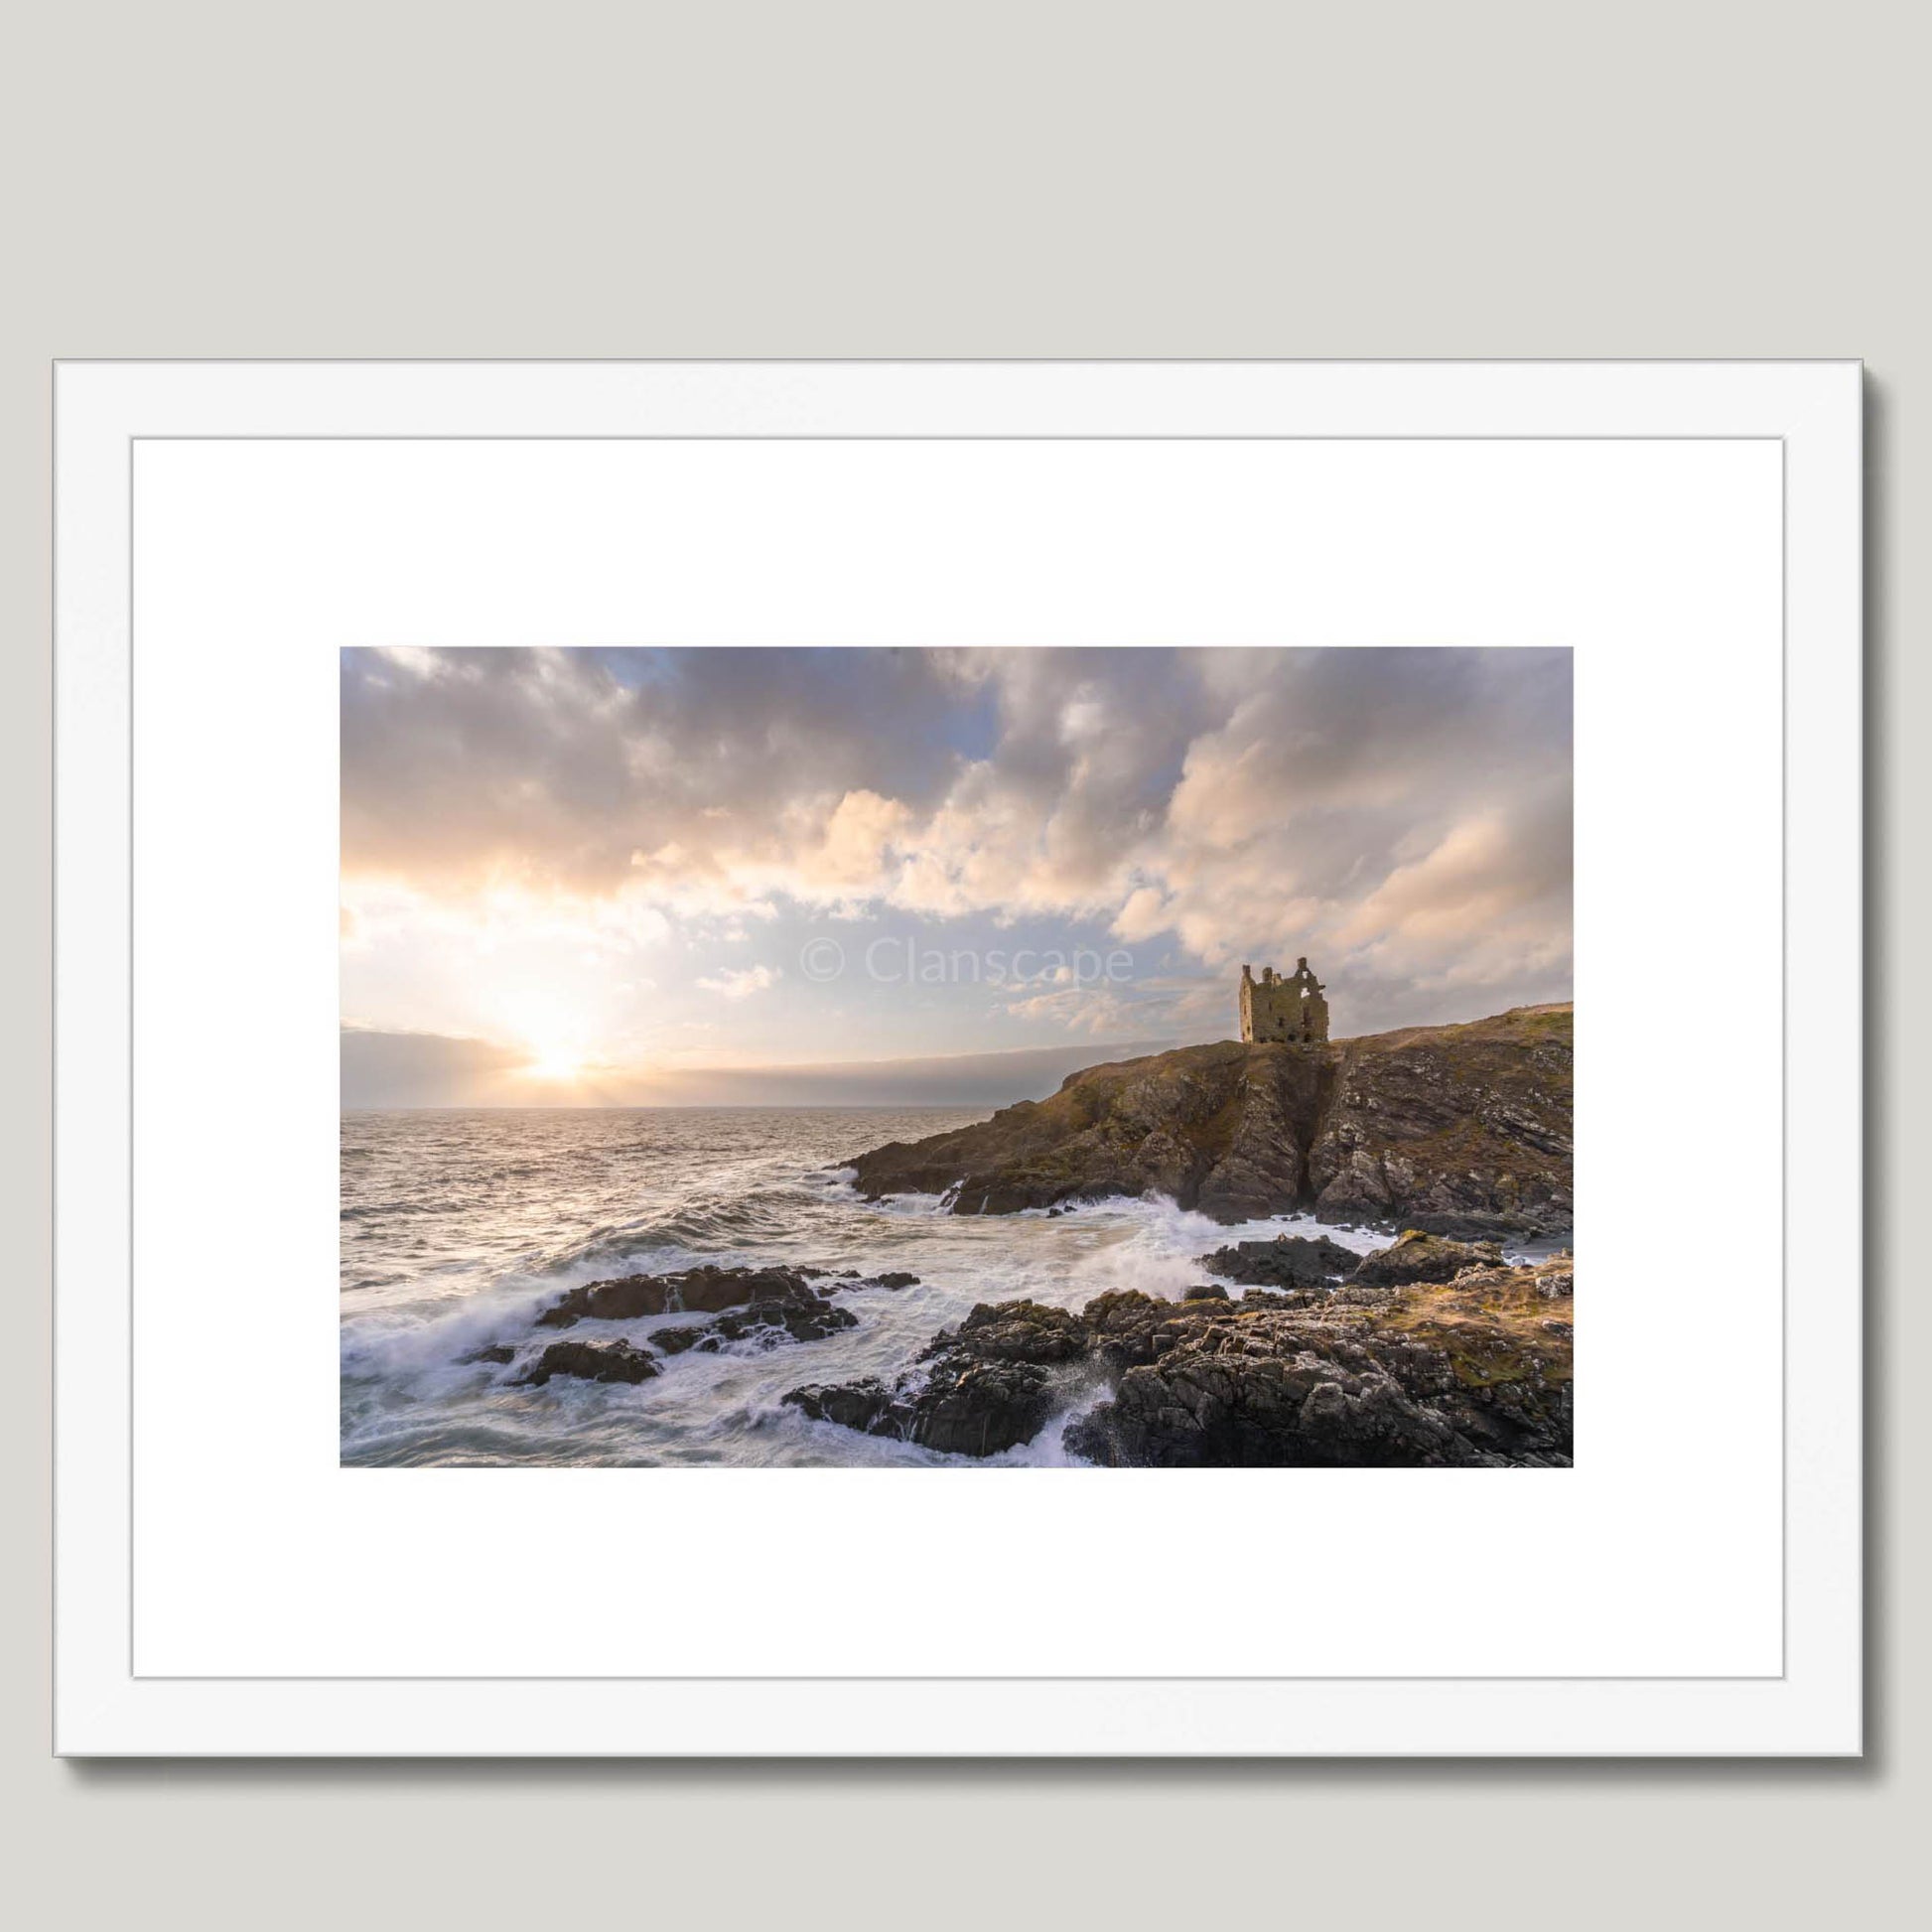 Clan Adair - Dunskey Castle - Framed & Mounted Photo Print 16"x12" White